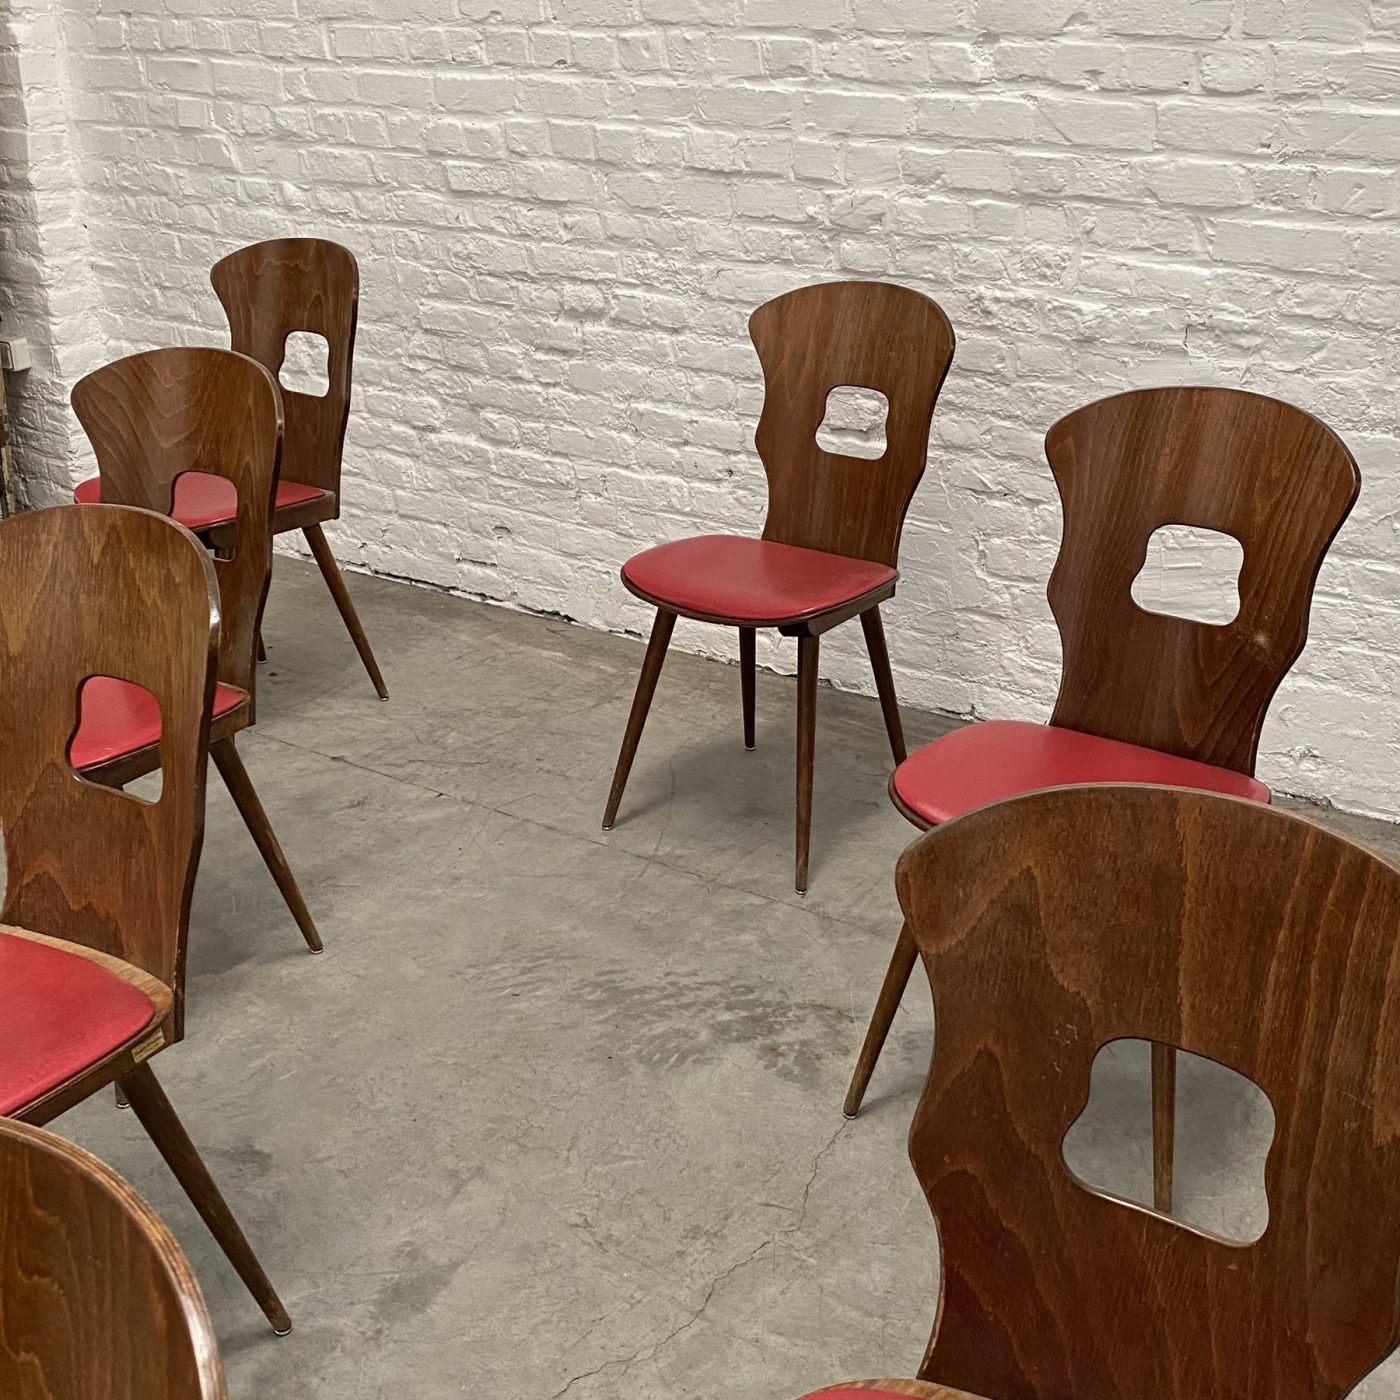 objet-vagabond-baumann-chairs0002